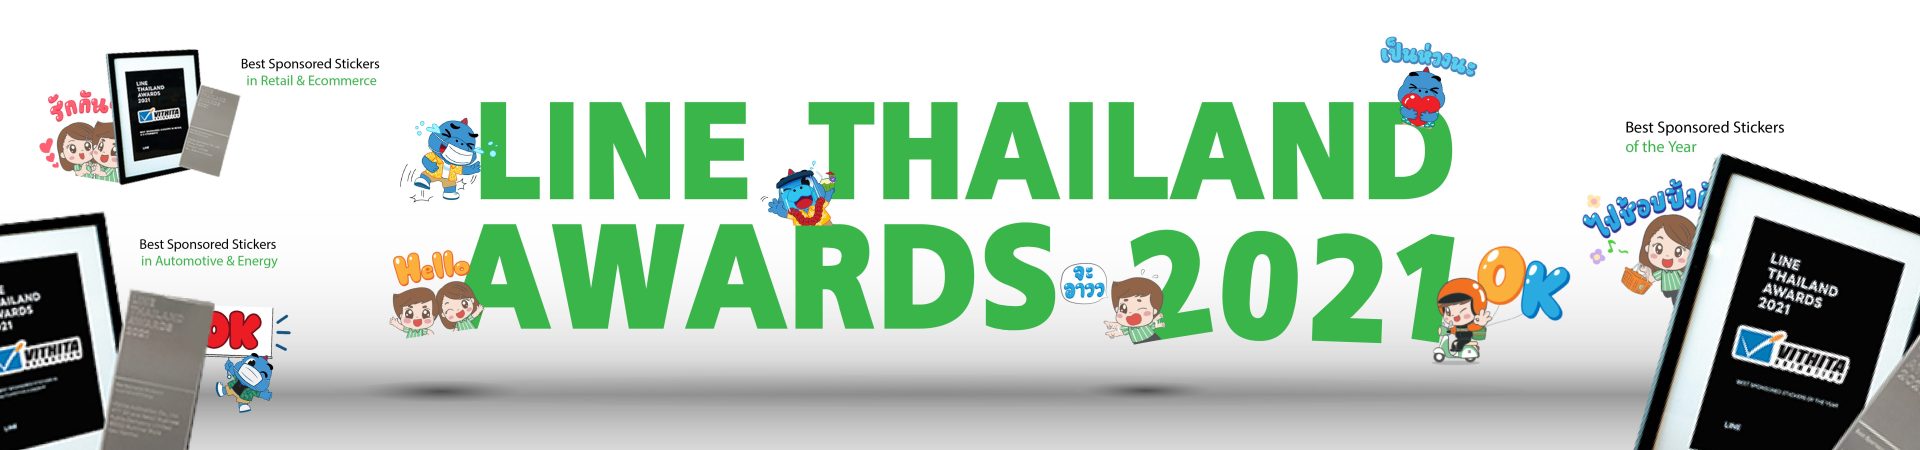 LINE THAILAND AWARDS 2021